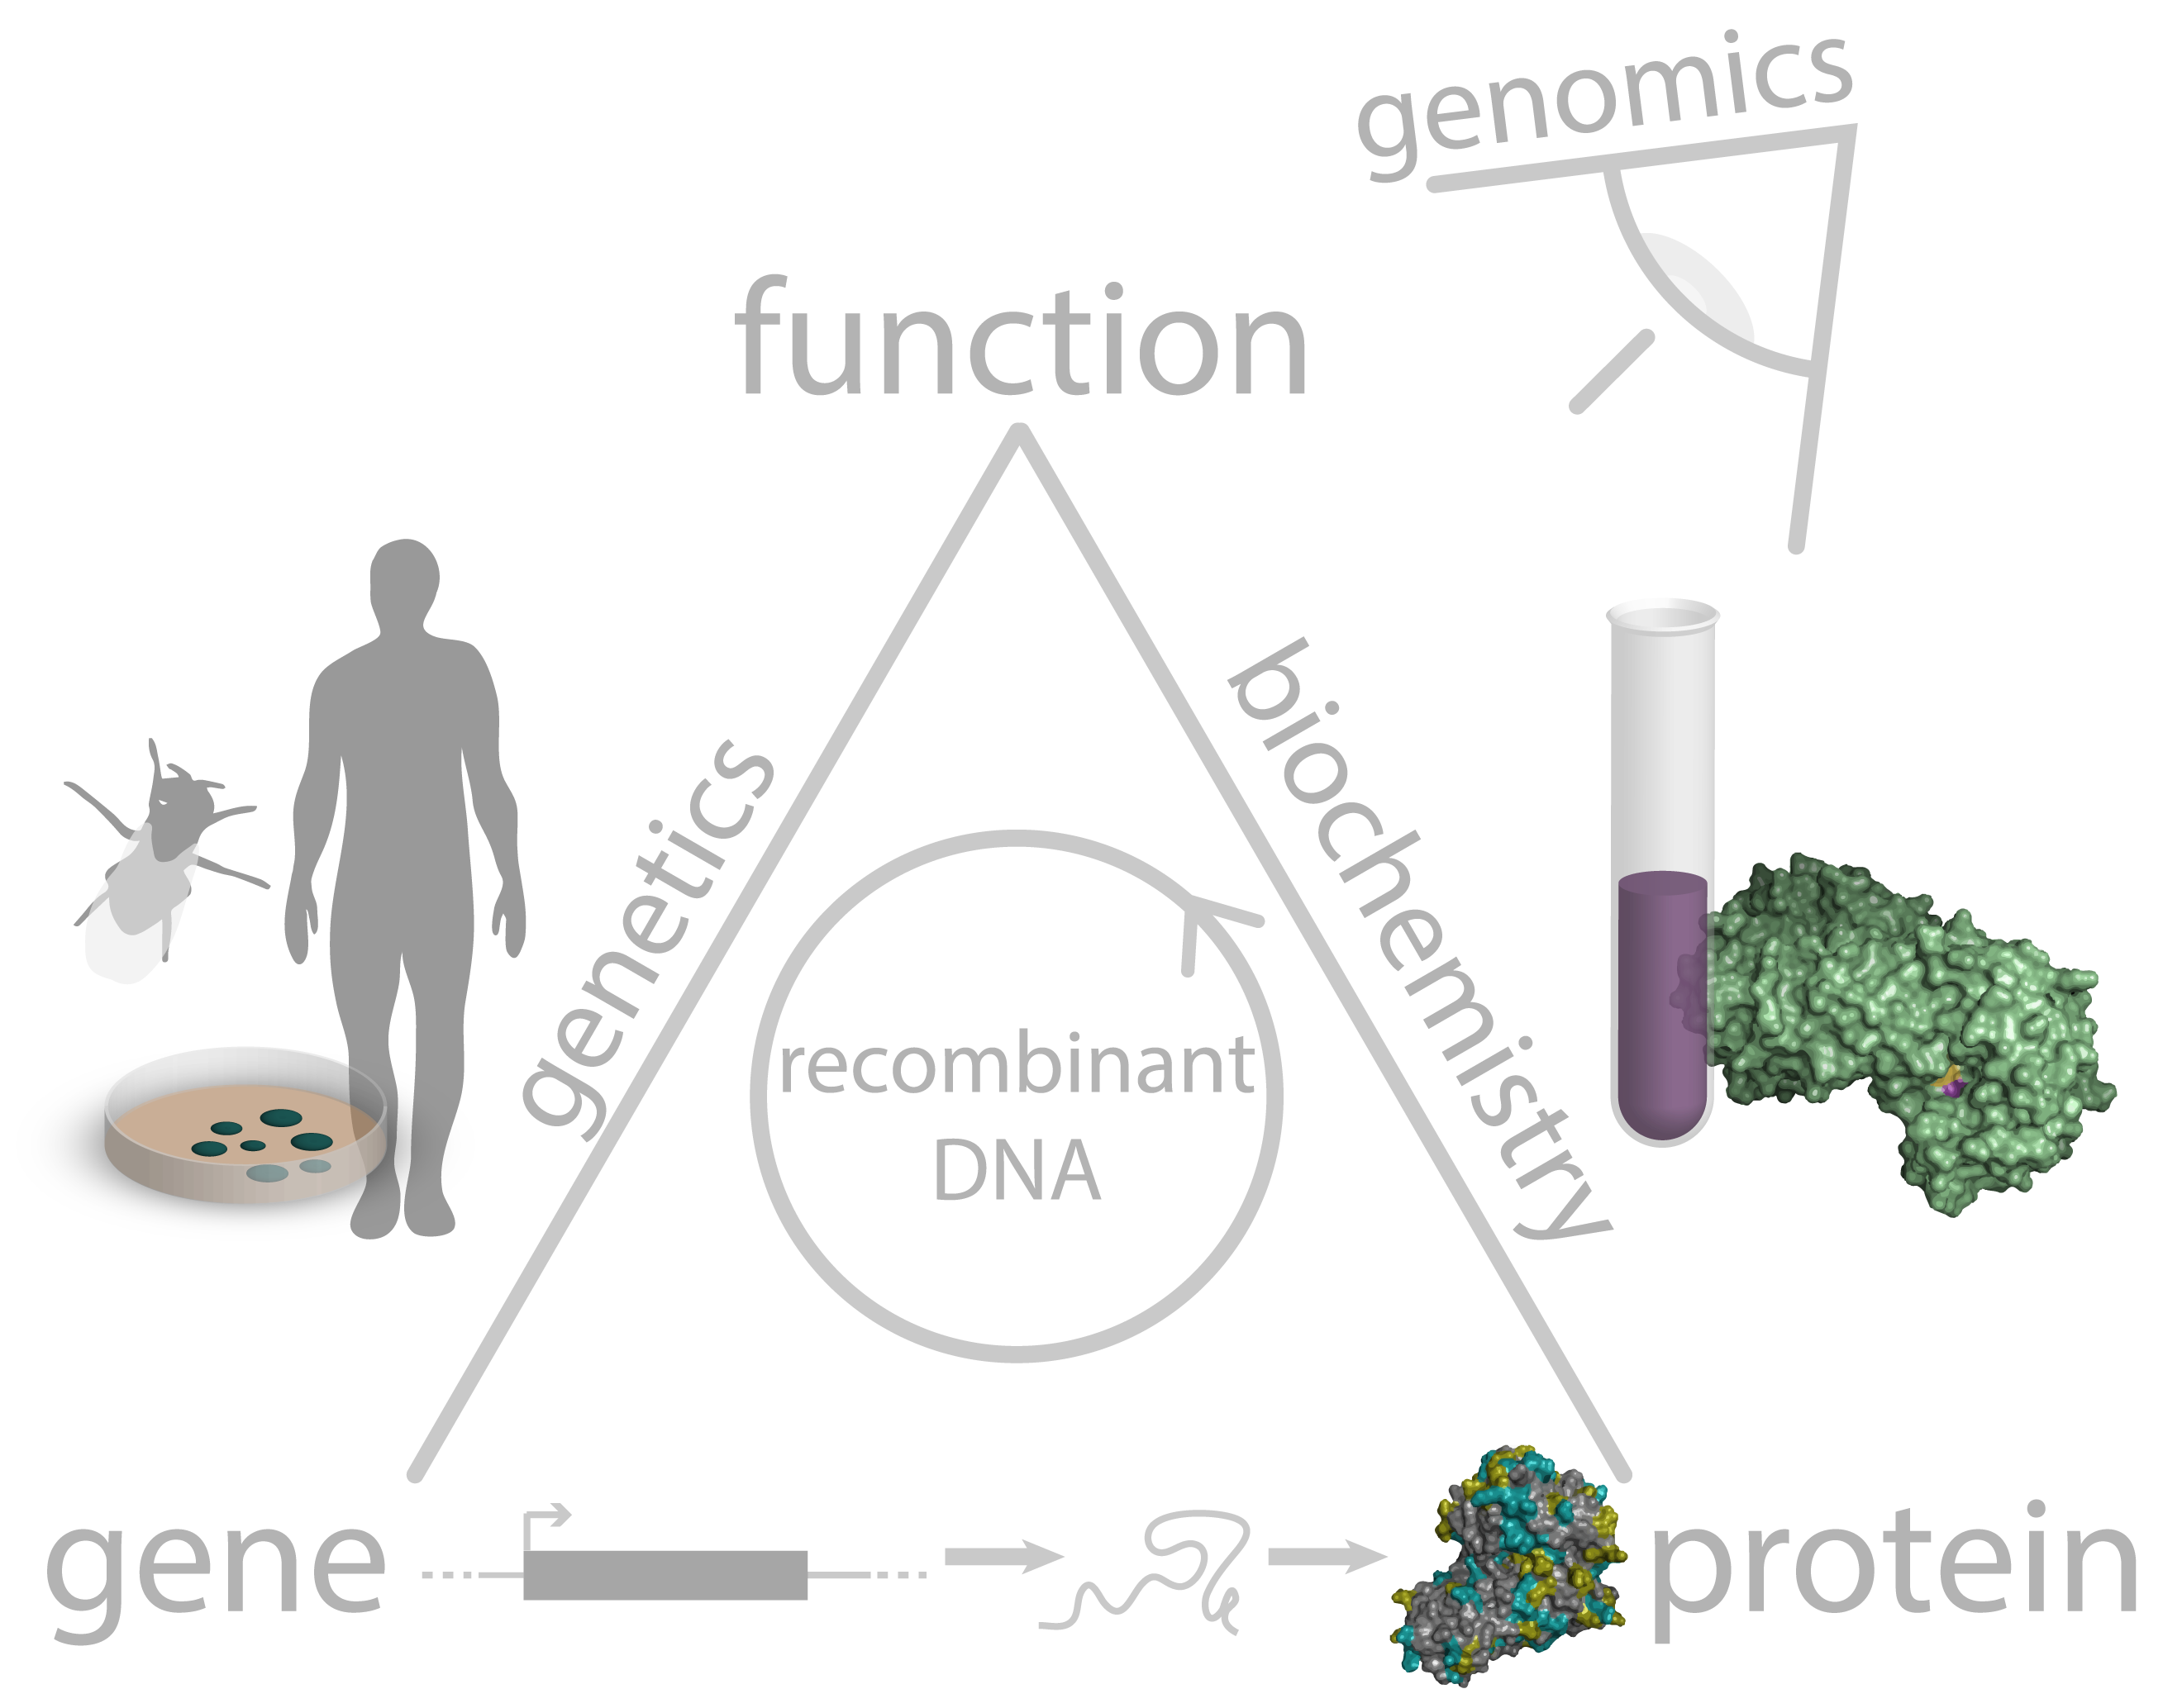 Professor Eric Lander's iconic biology triangle.